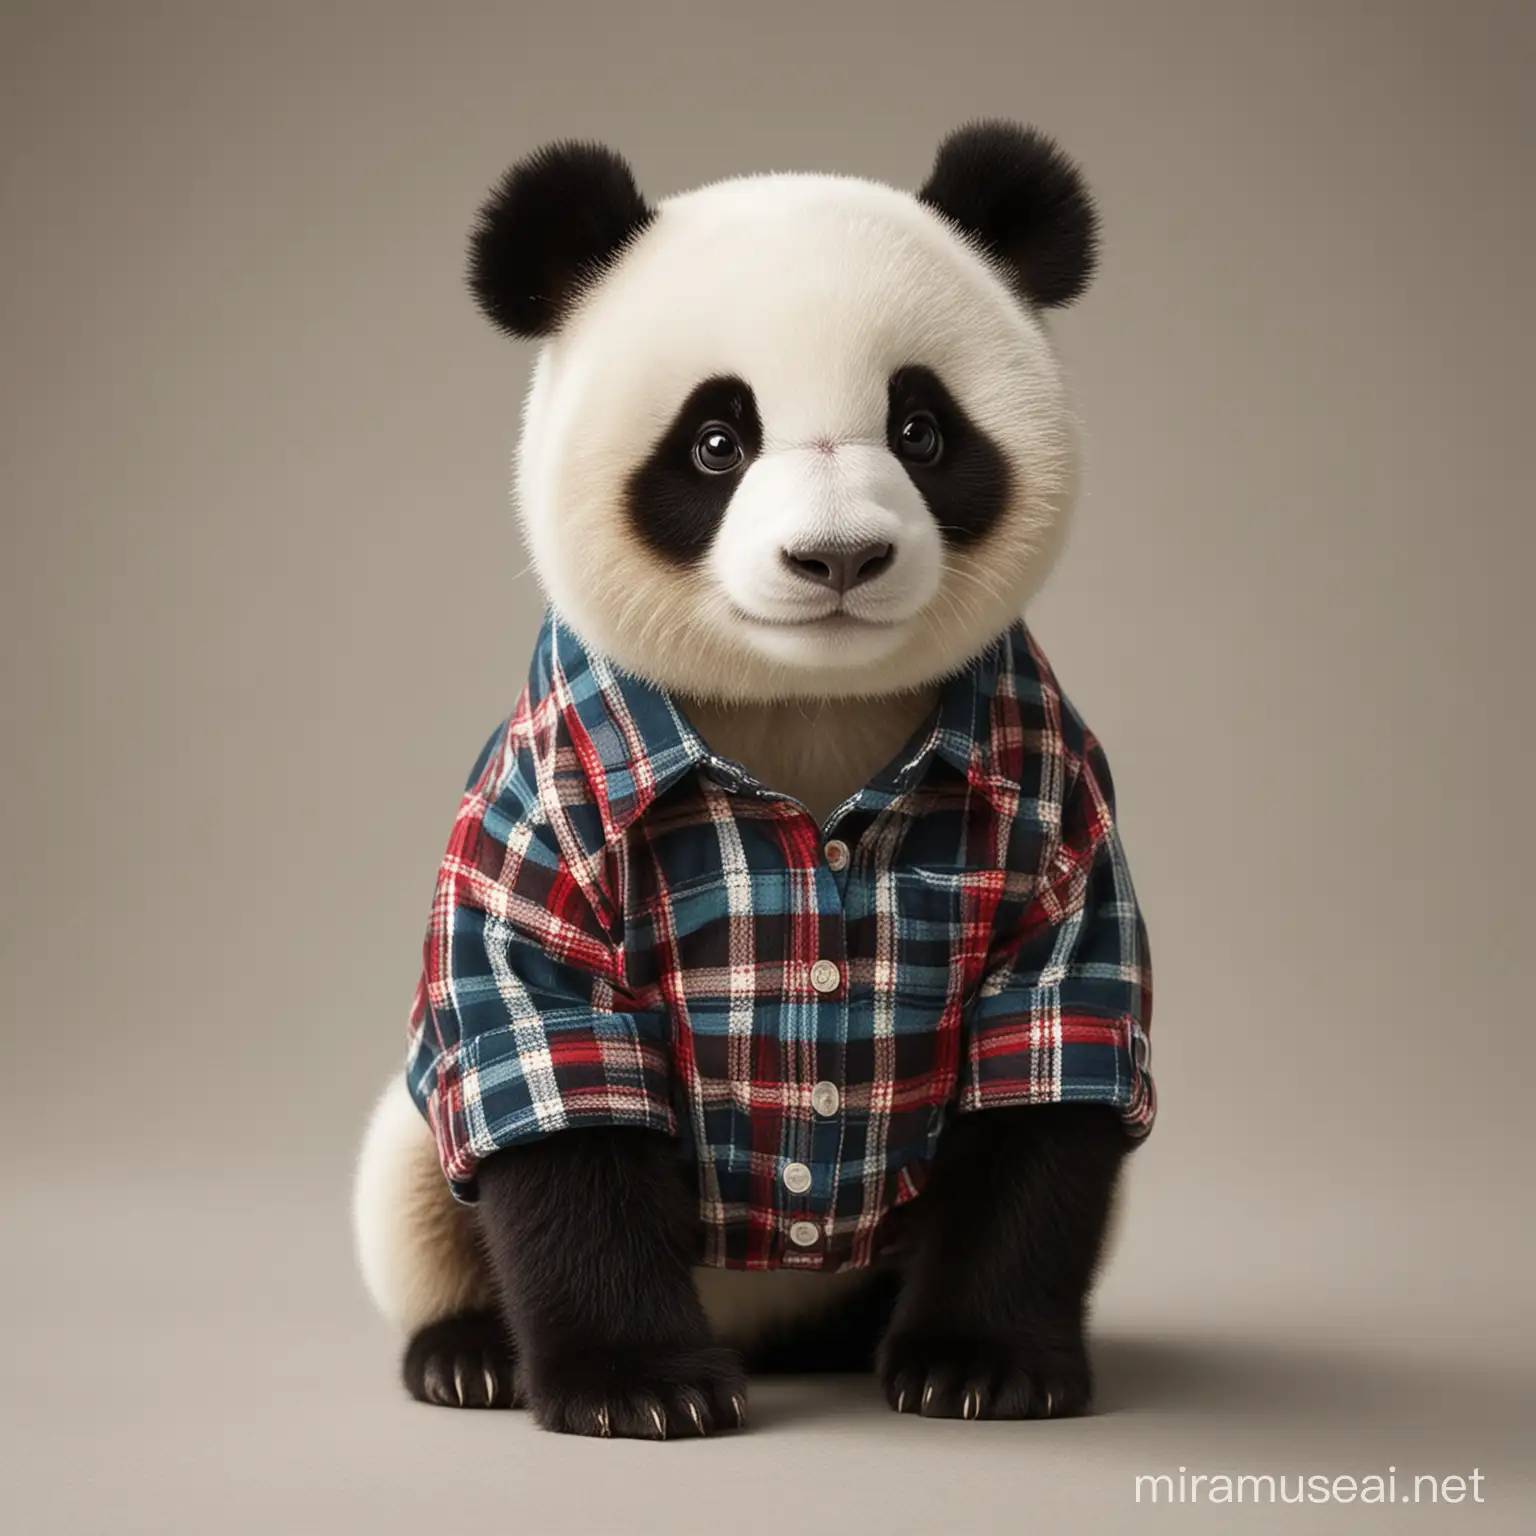 Plaid Shirtwearing Panda in Bamboo Grove